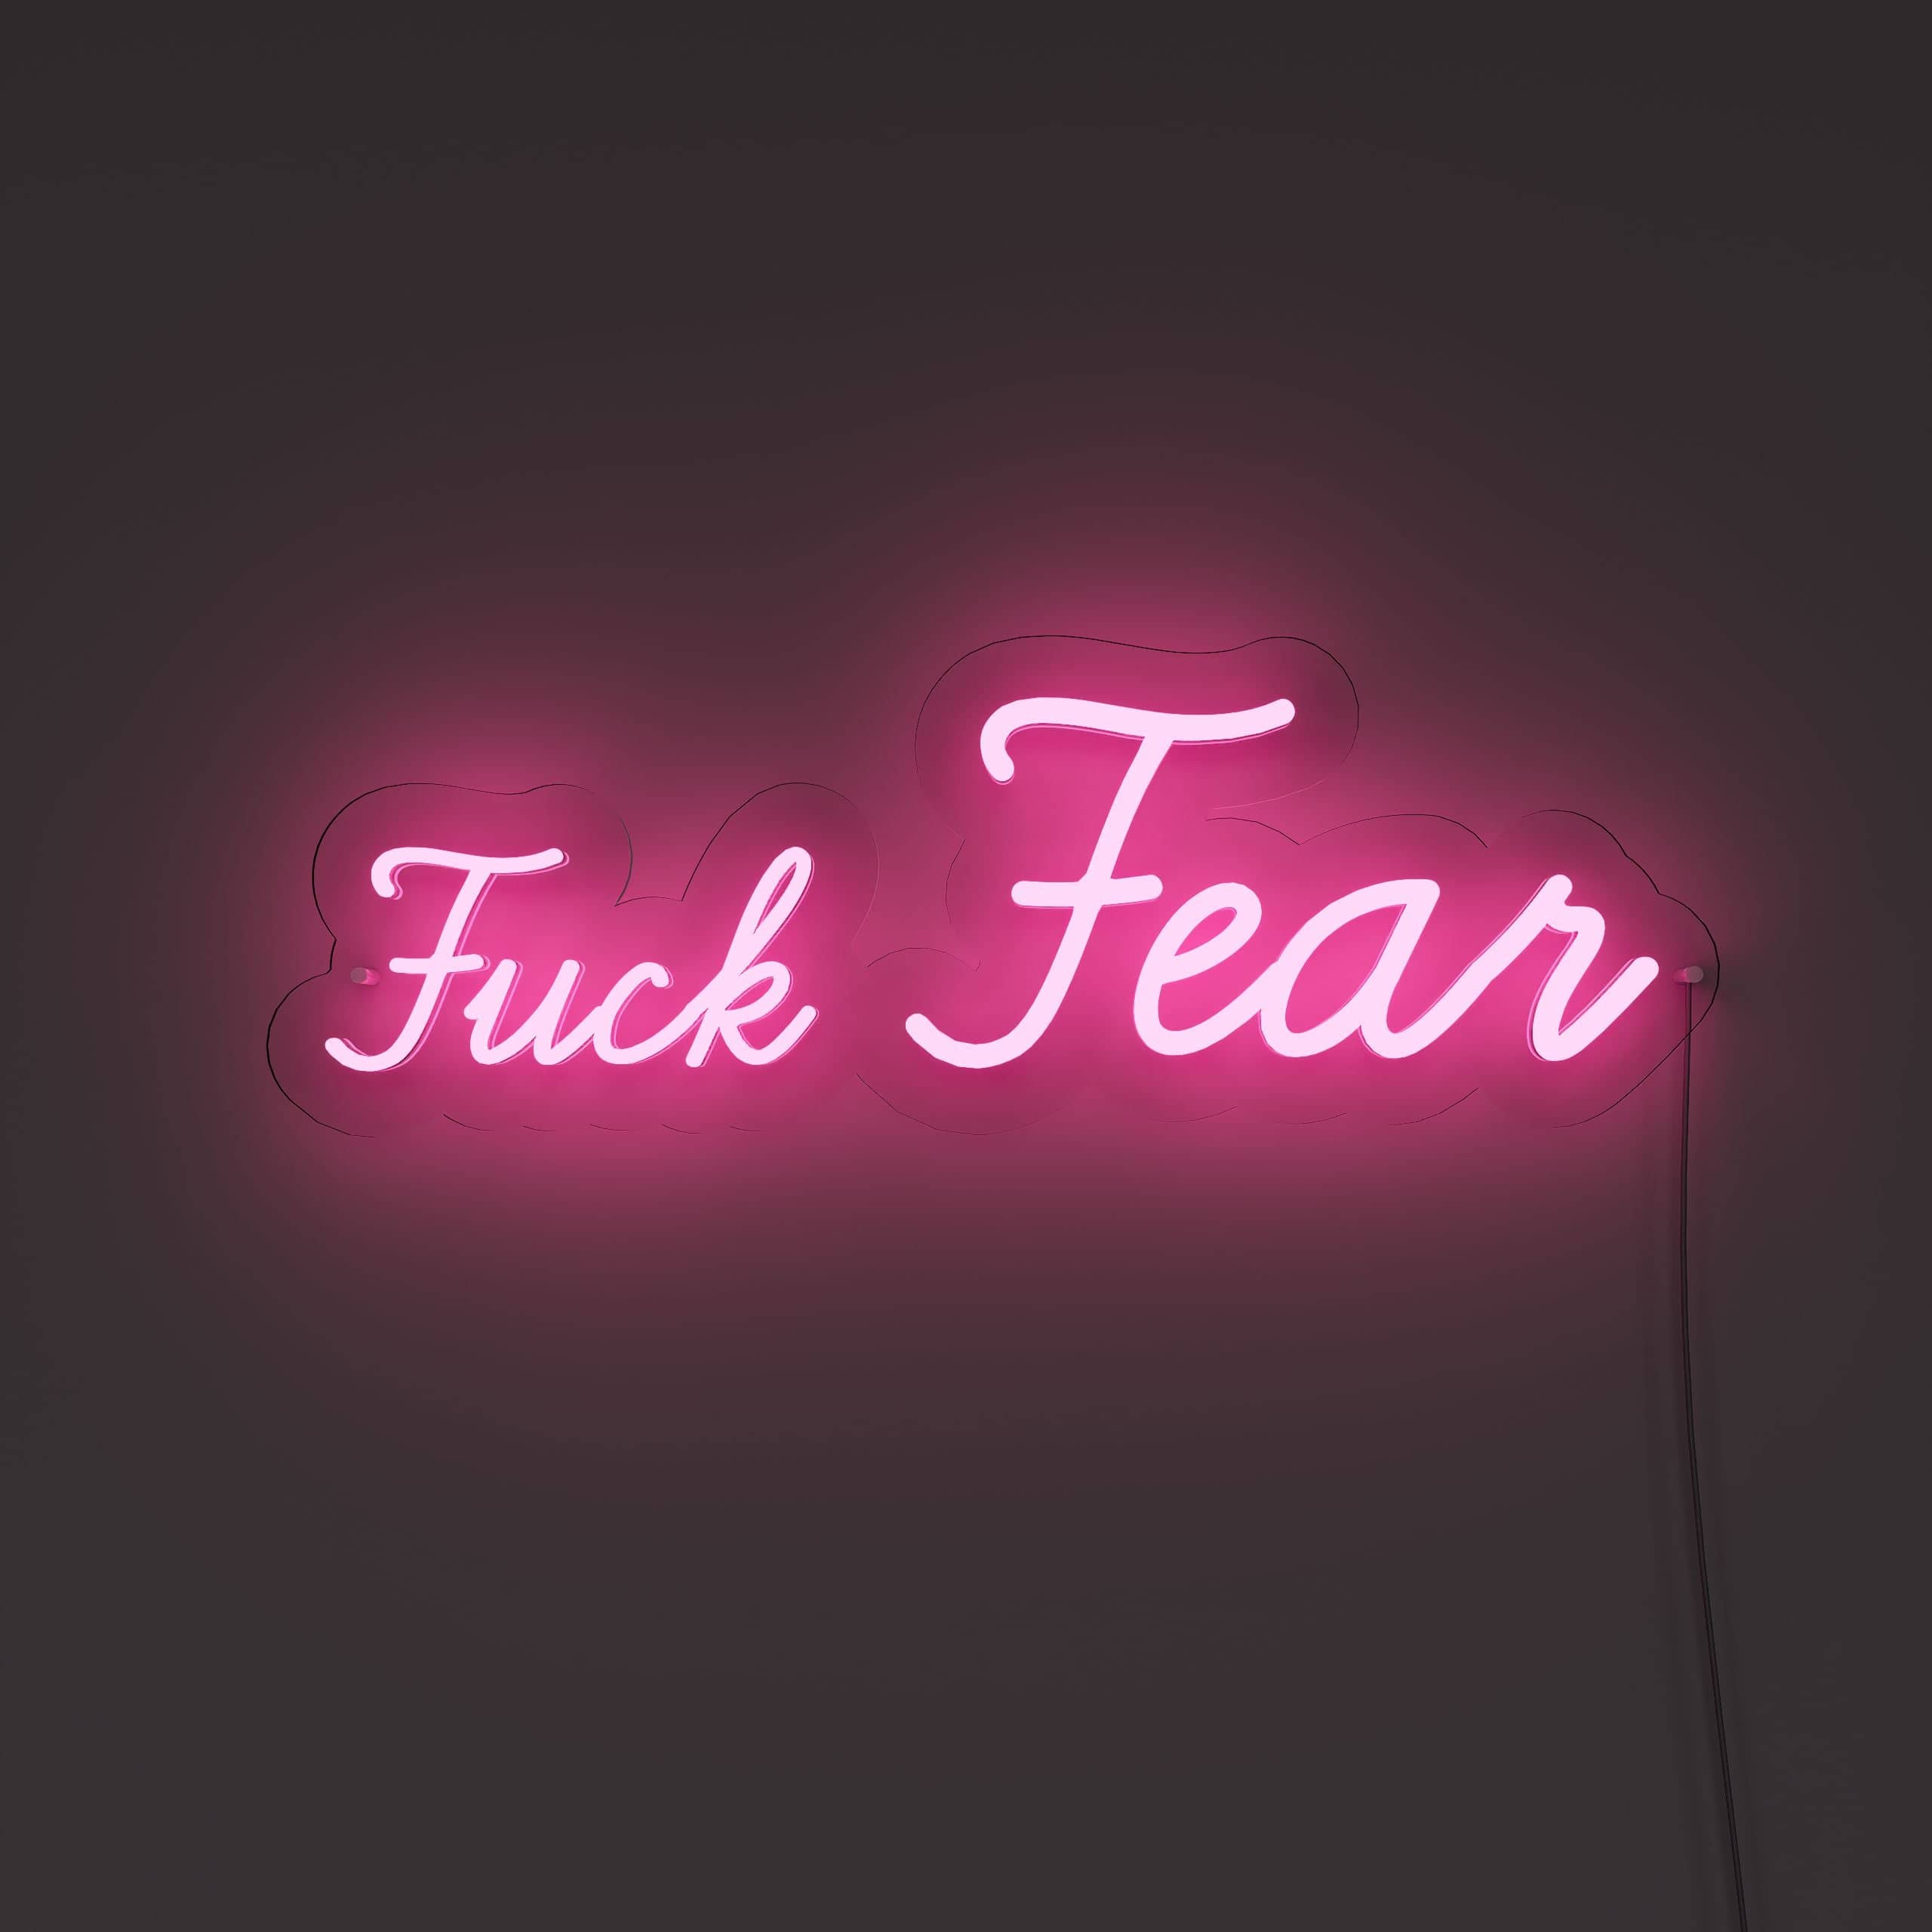 crush-fear,-unleash-your-potential-neon-sign-lite